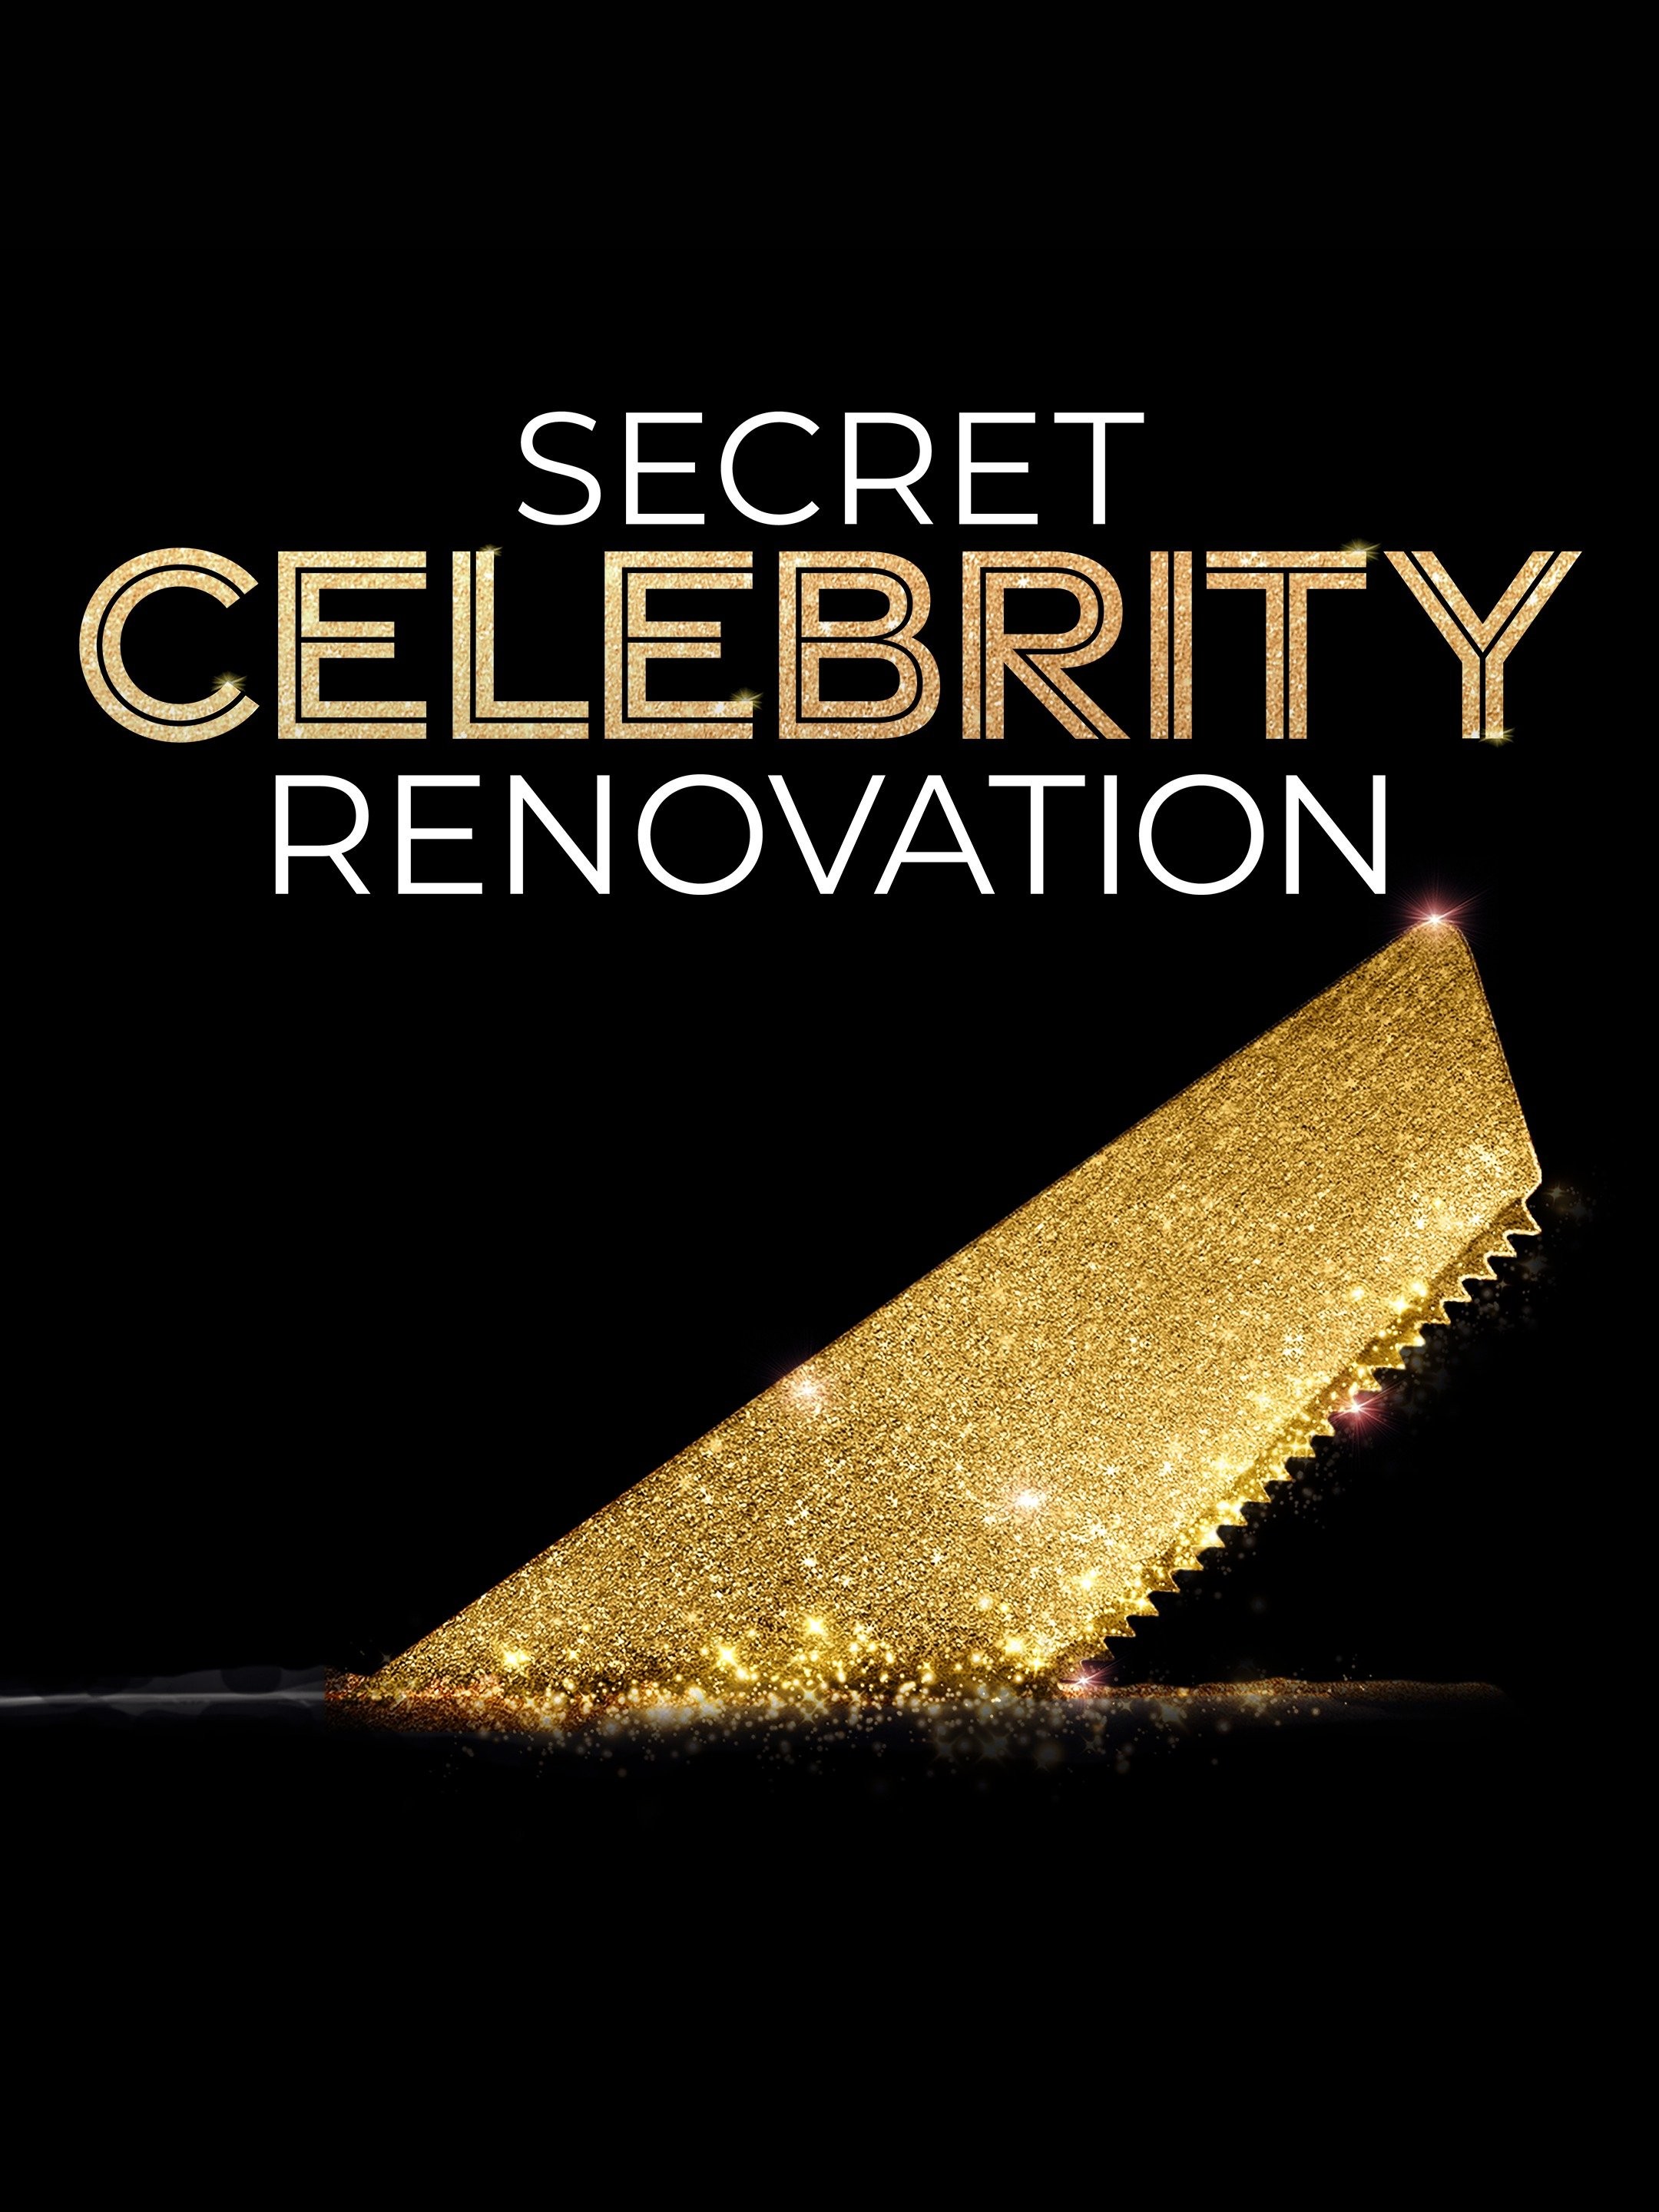 Billy Gardell, Aaron Donald give back to loved ones on 'Secret Celebrity  Renovation